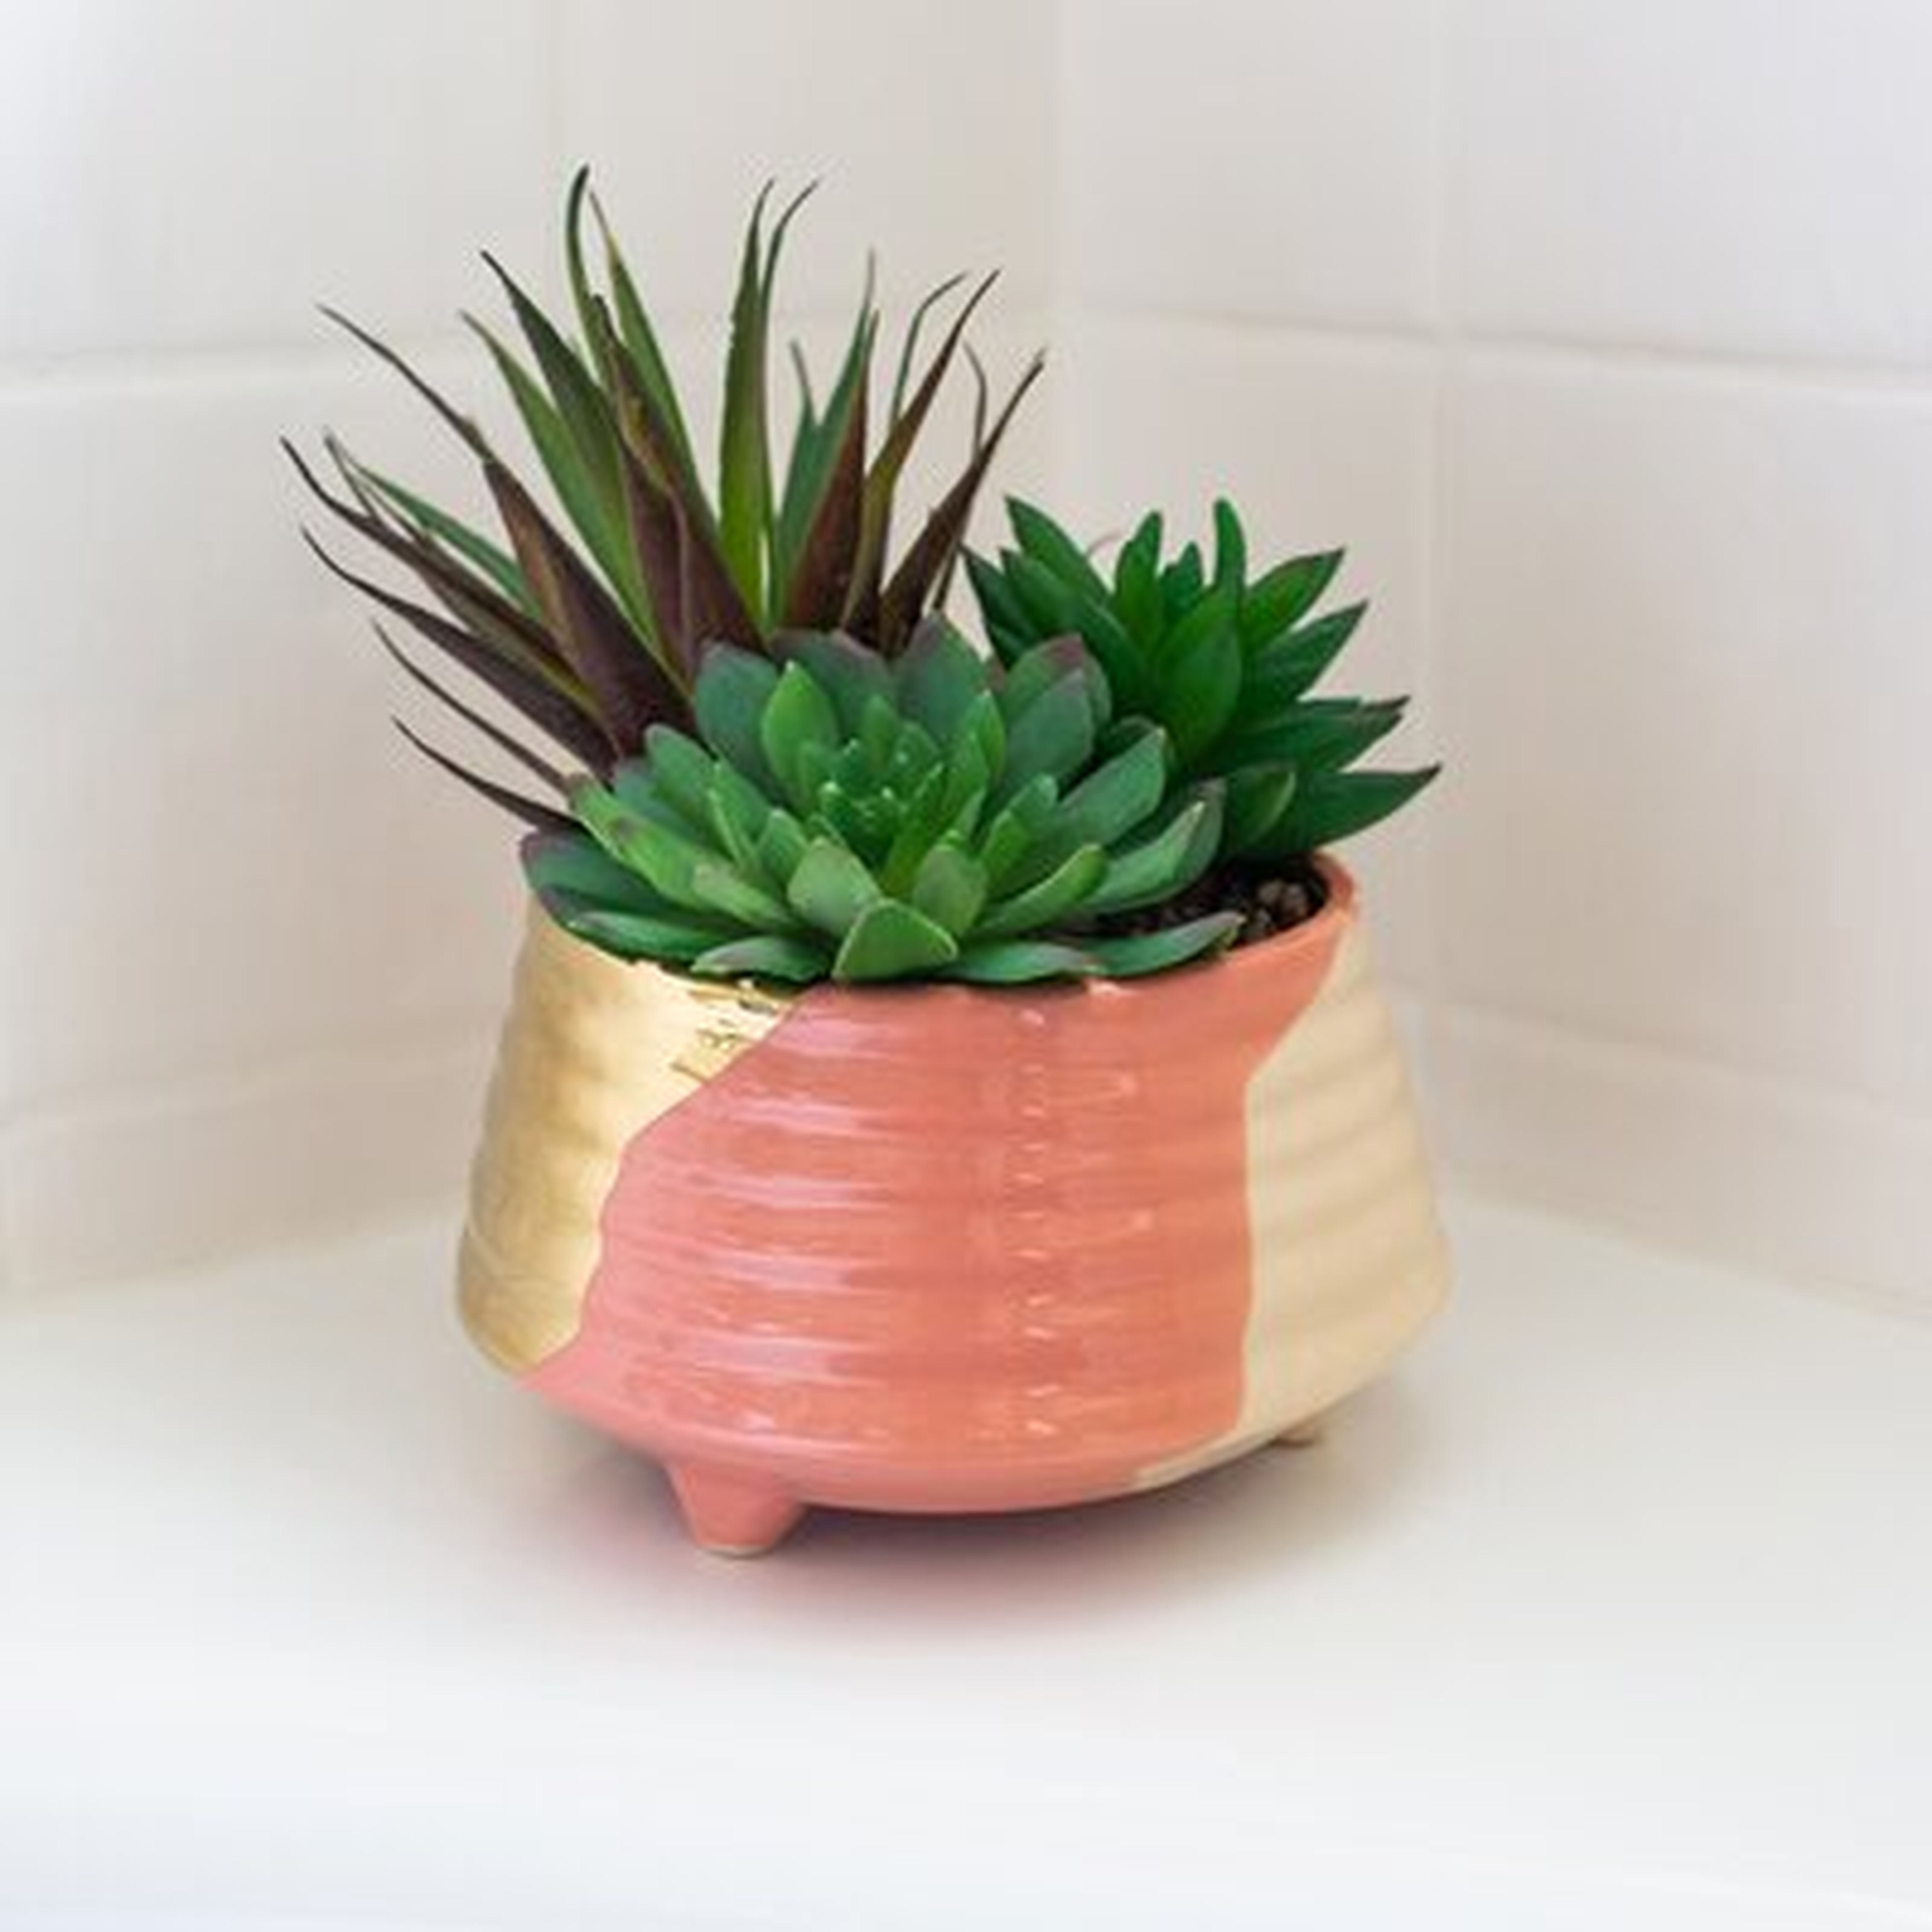 Garden Tone Footed Ceramic Cactus/Agave Succulent in Pot - Wayfair